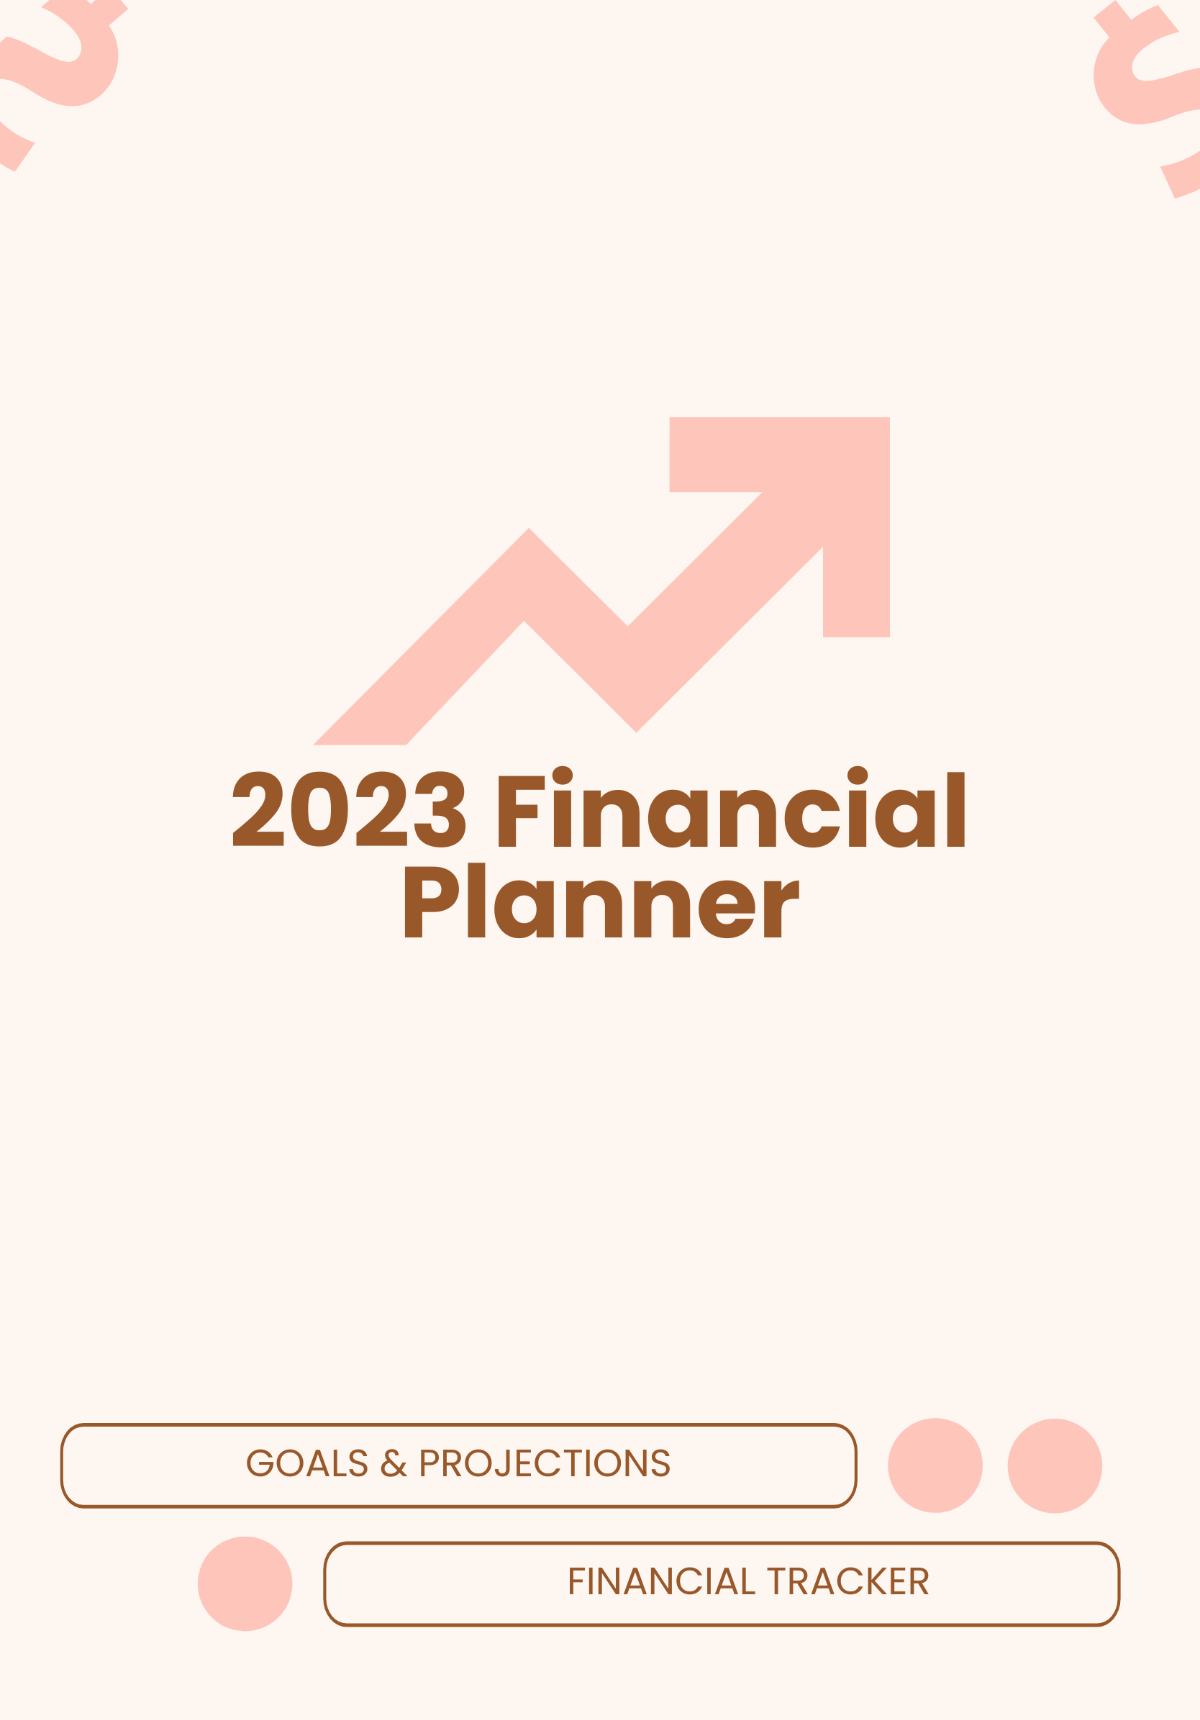 2023 Financial Planner Template